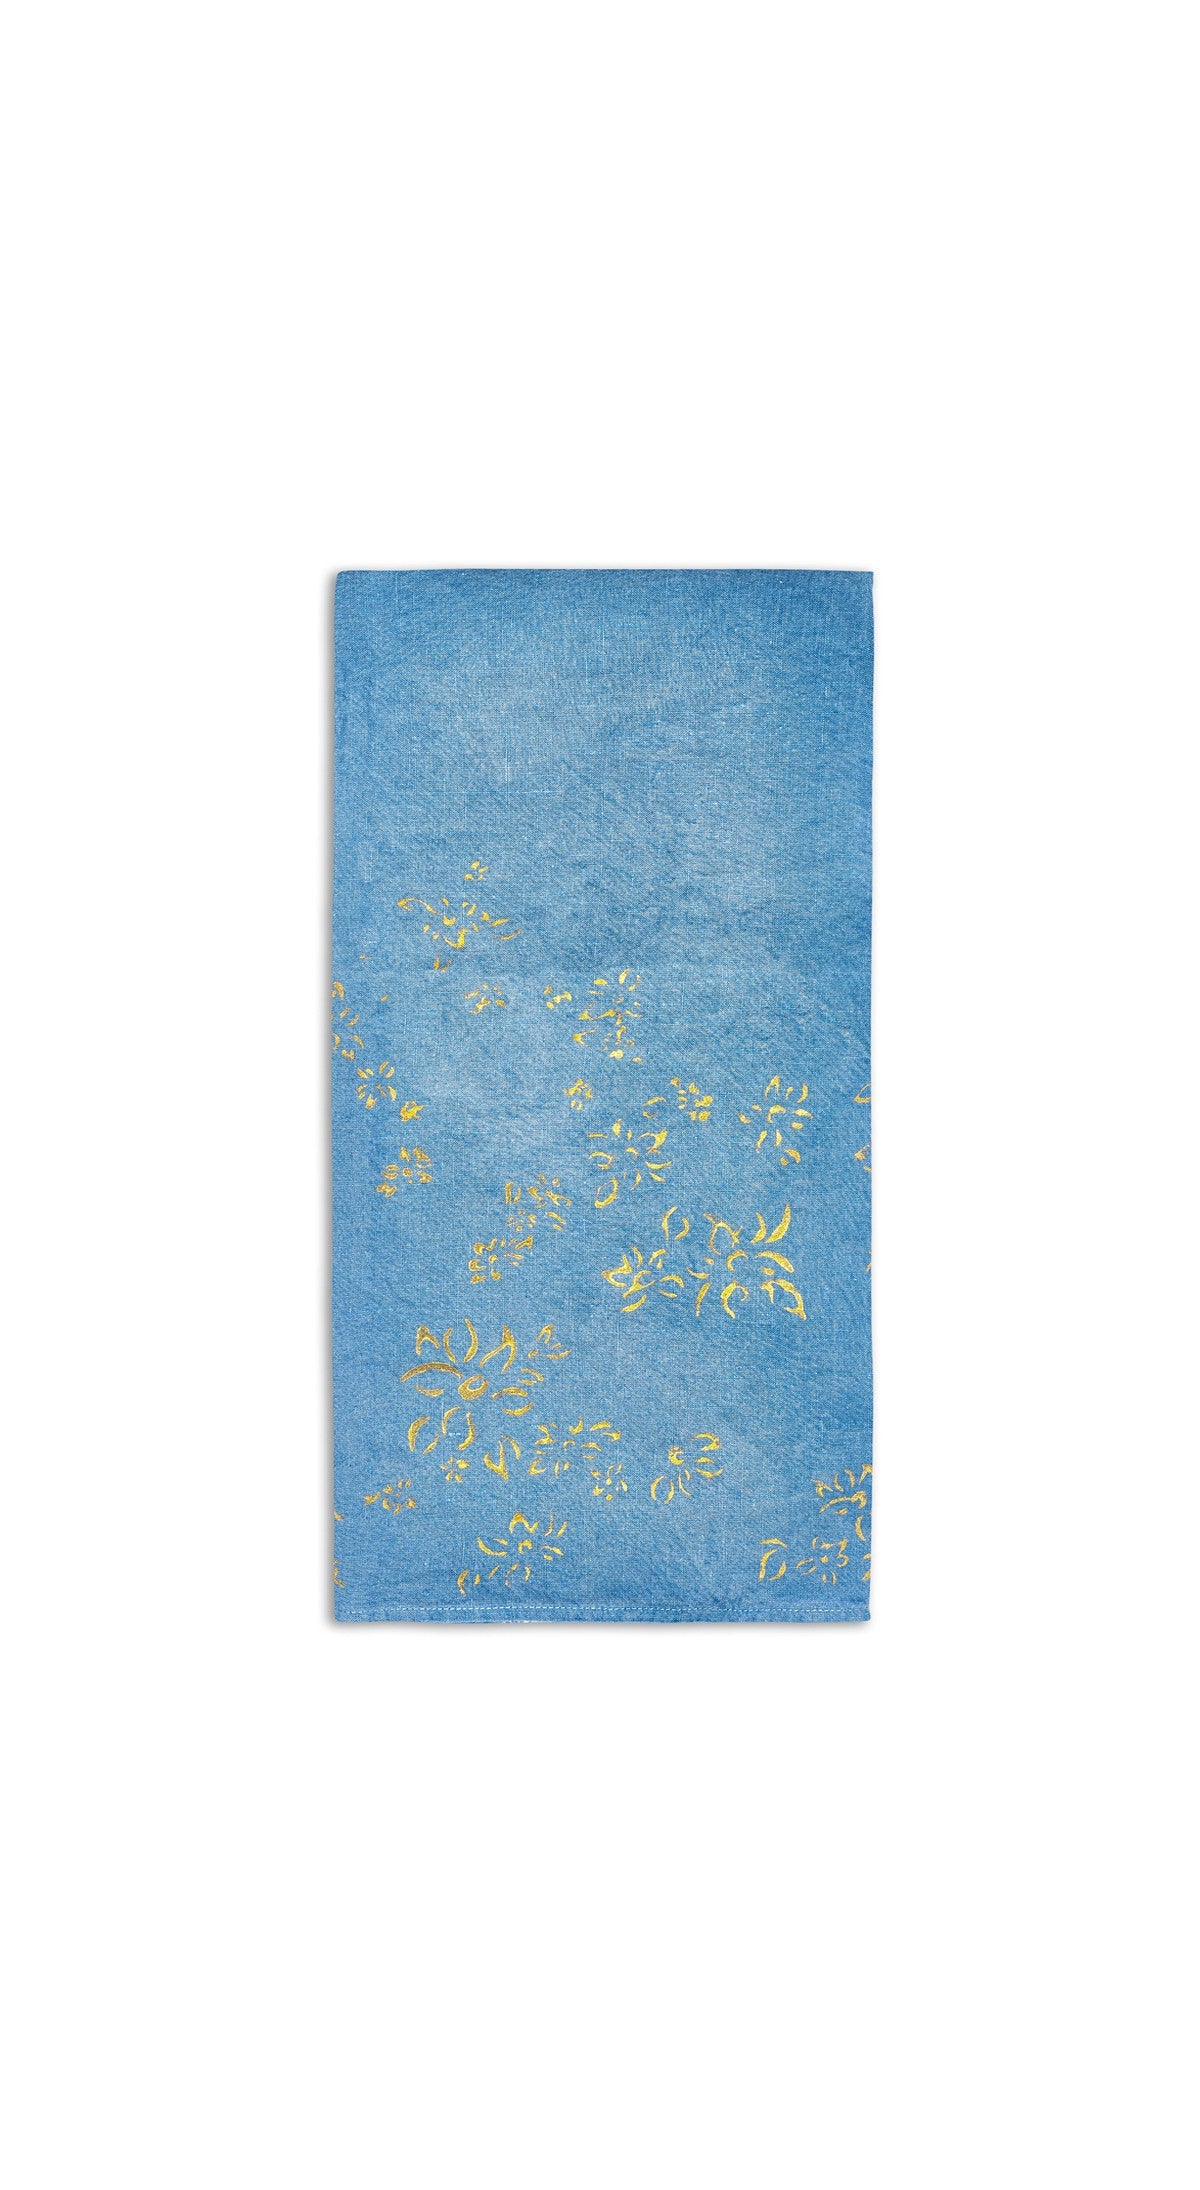 Bernadette's Hand Stamped Falling Flower On Full Field Linen Napkin in Sky Blue & Gold, 50x50cm